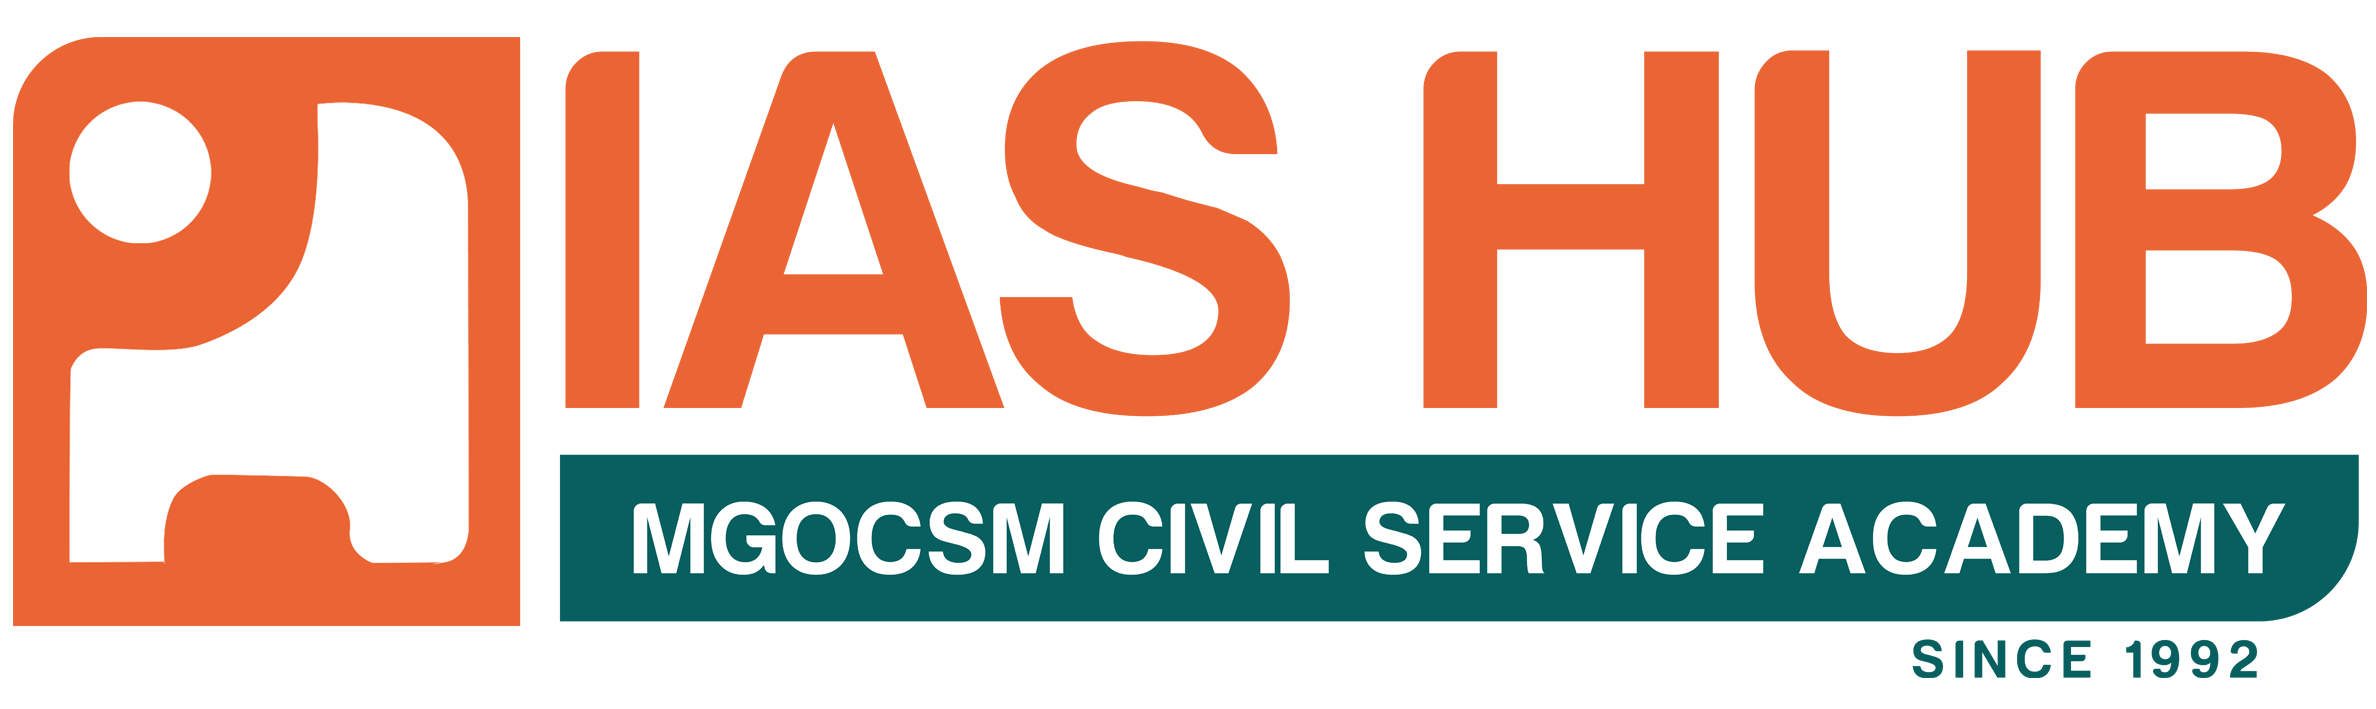 mgocsm-civil-service-academy